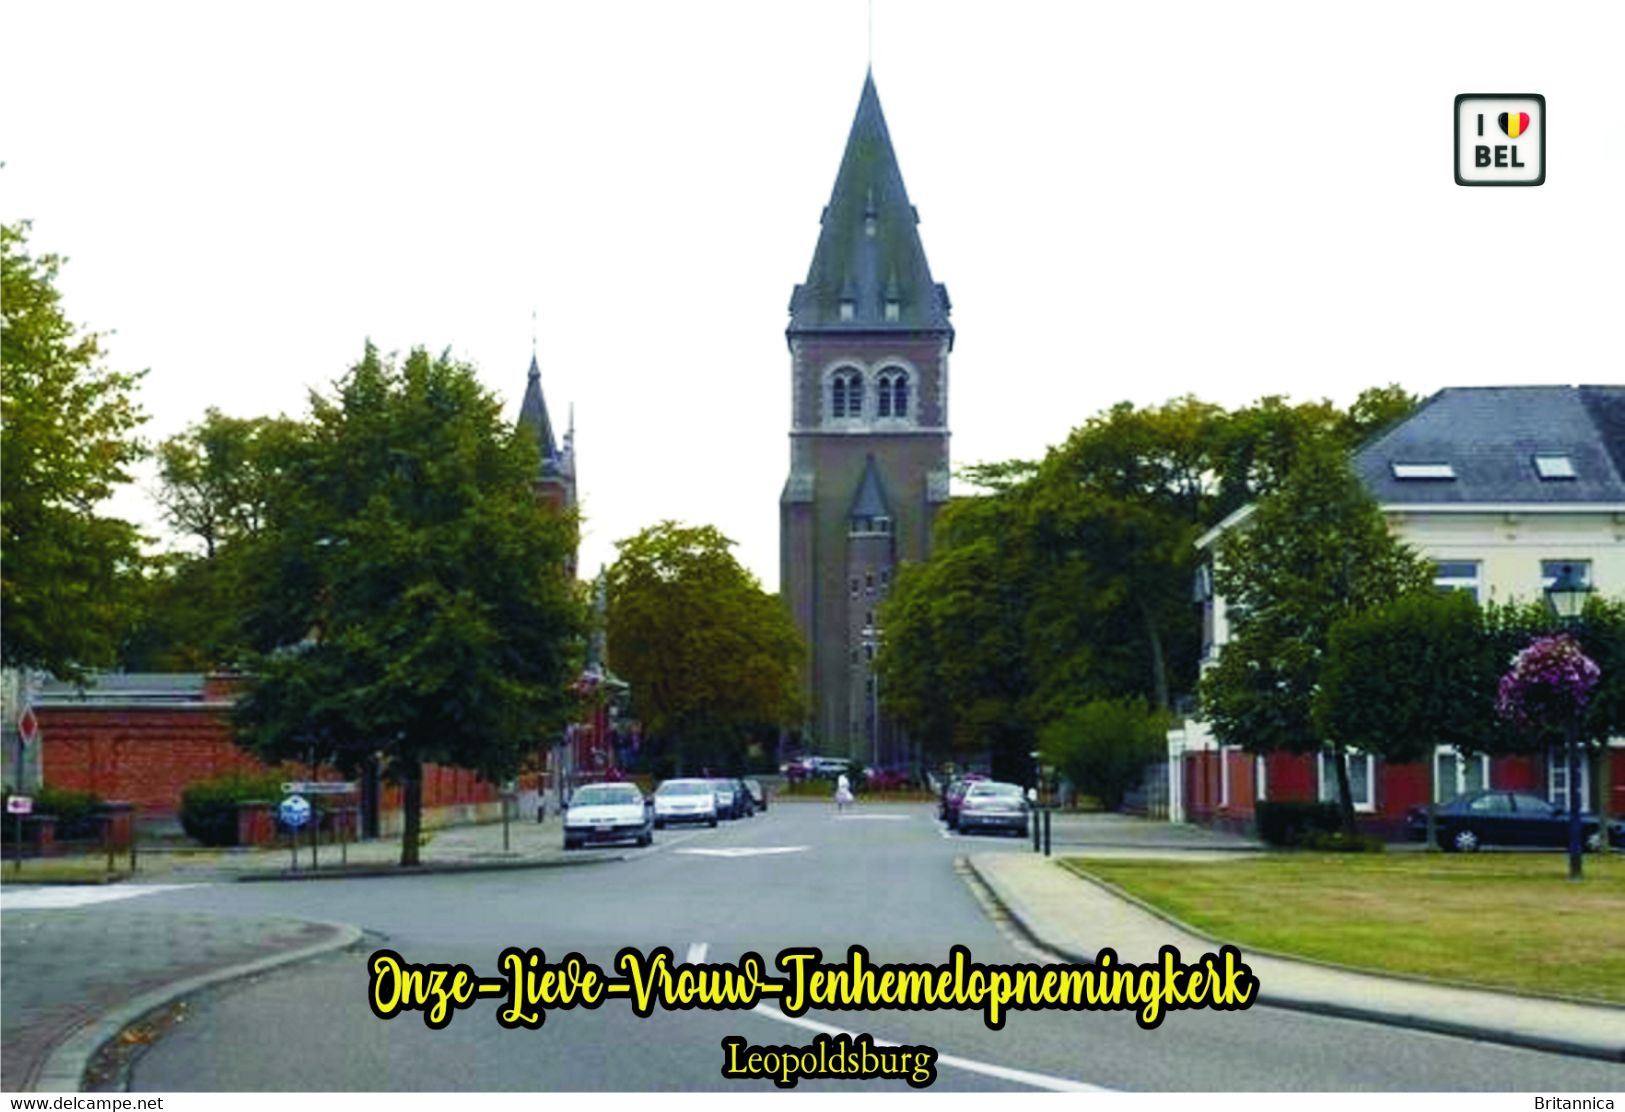 Set 8 Cartes Postales, Churches, Belgium (Limburg), Leopoldsburg, Onze-Liew-Vrouw-Tenhemelopnemingskerk - Churches & Cathedrals